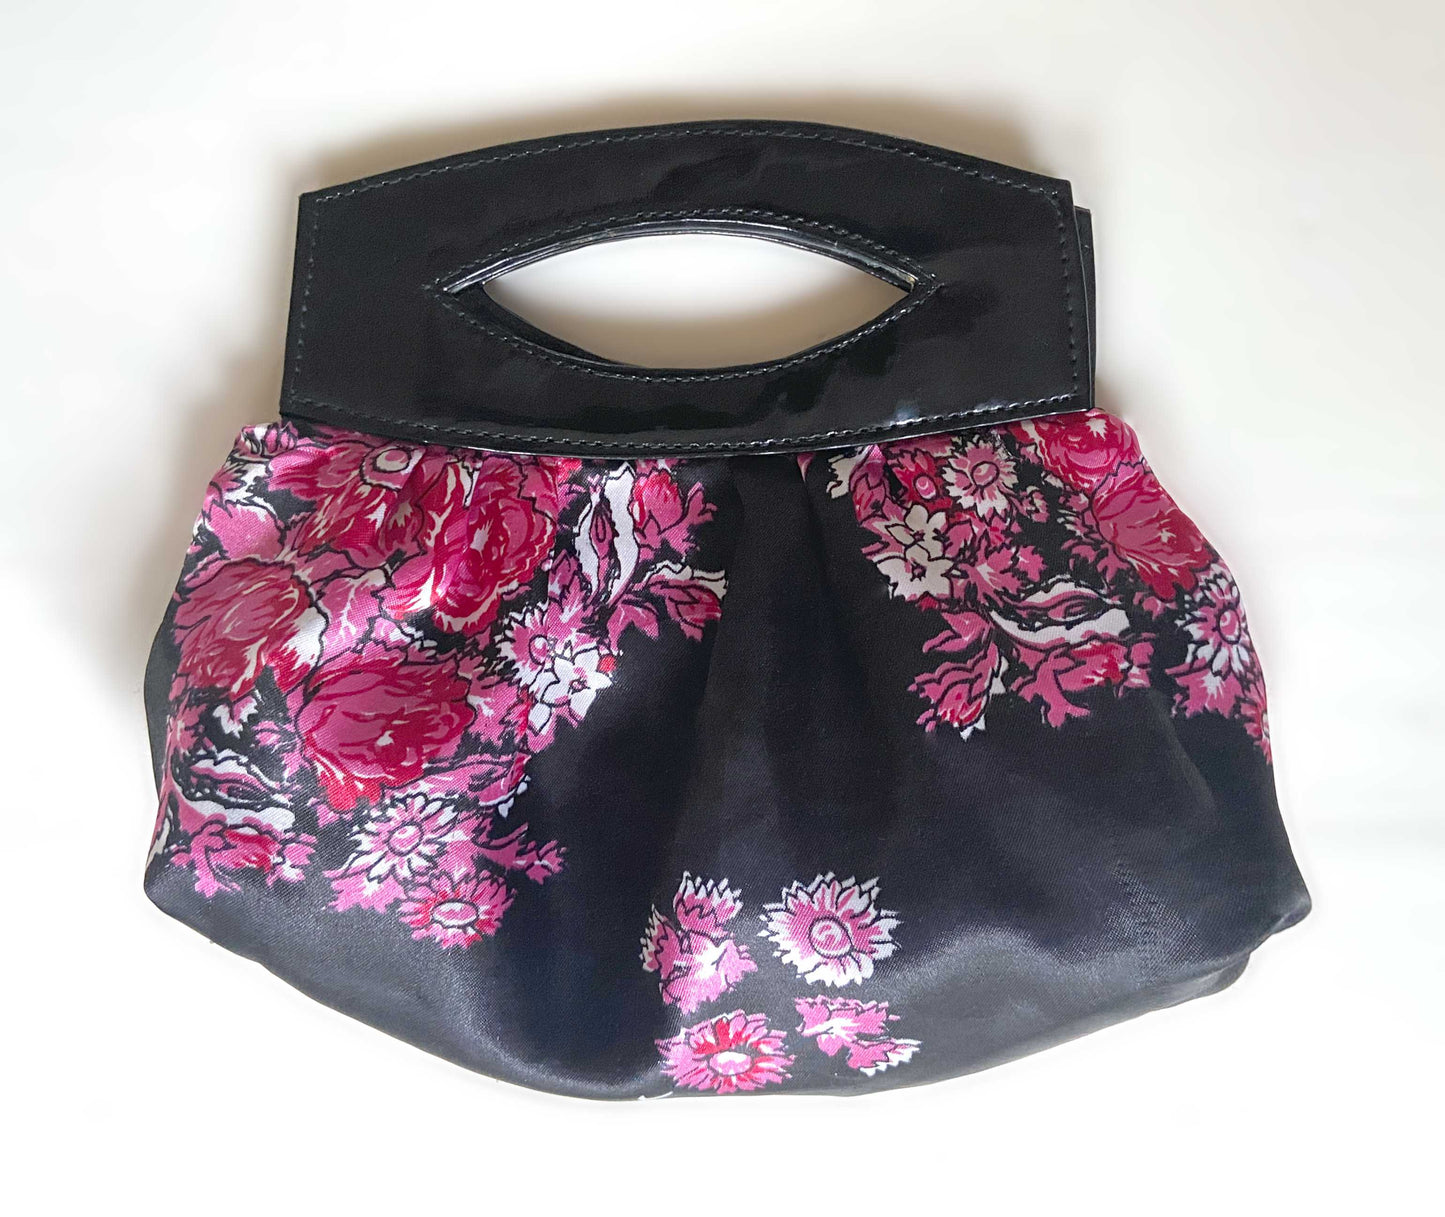 Petit sac pochette satin noir fleurs roses Kenzo© vintage